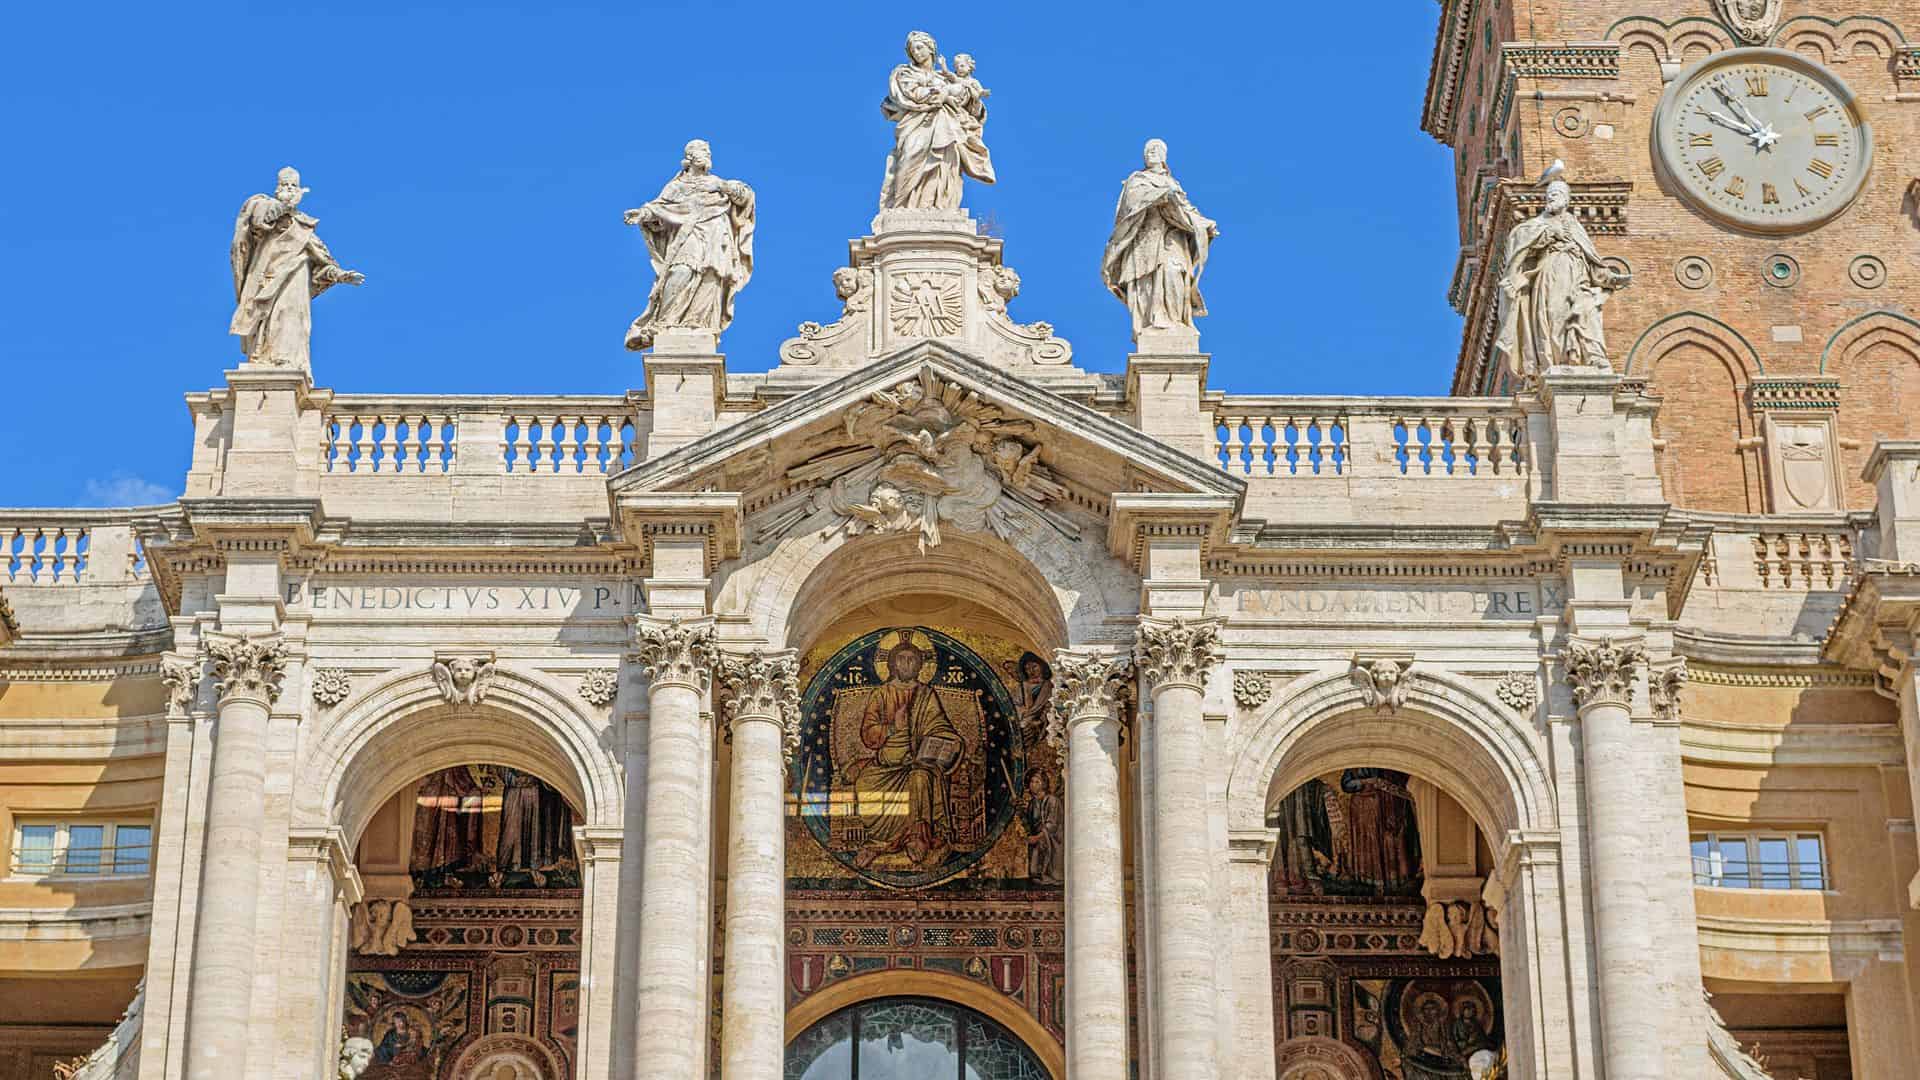 A close-up of the double facade of Santa Maria Maggiore.